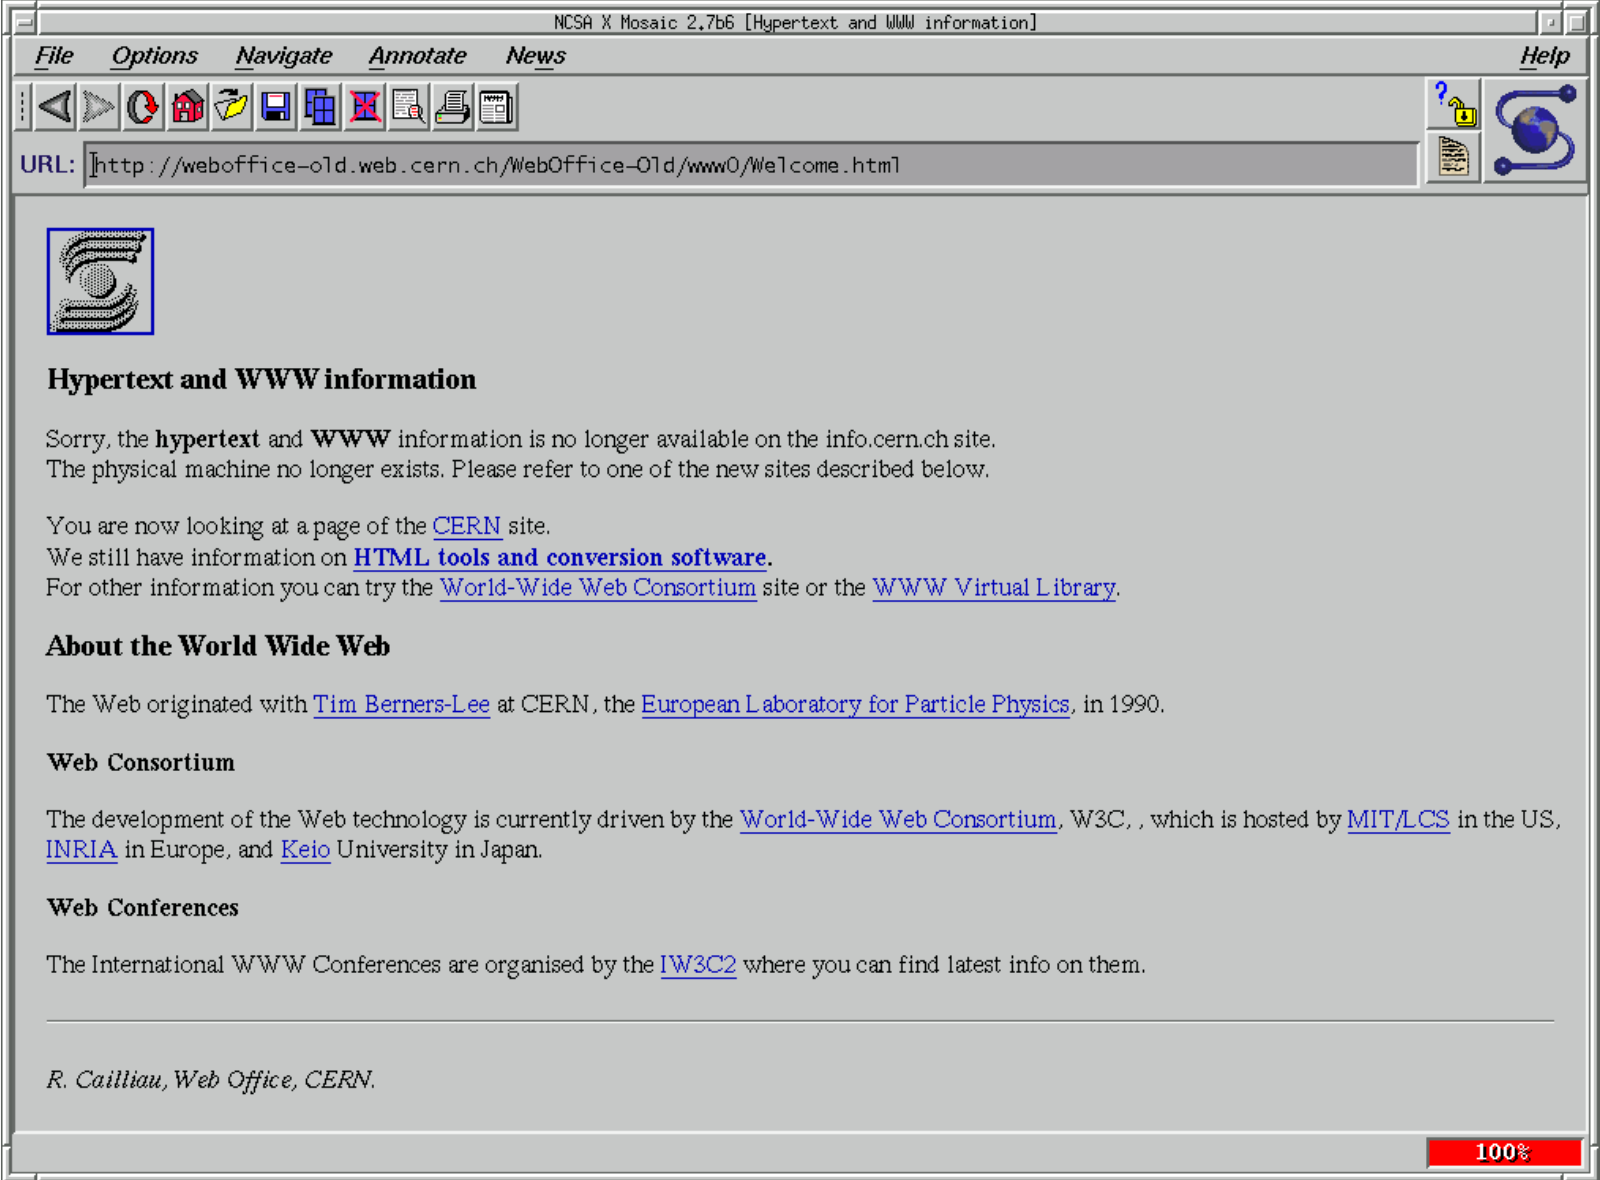 A screenshot of the Mosaic browser